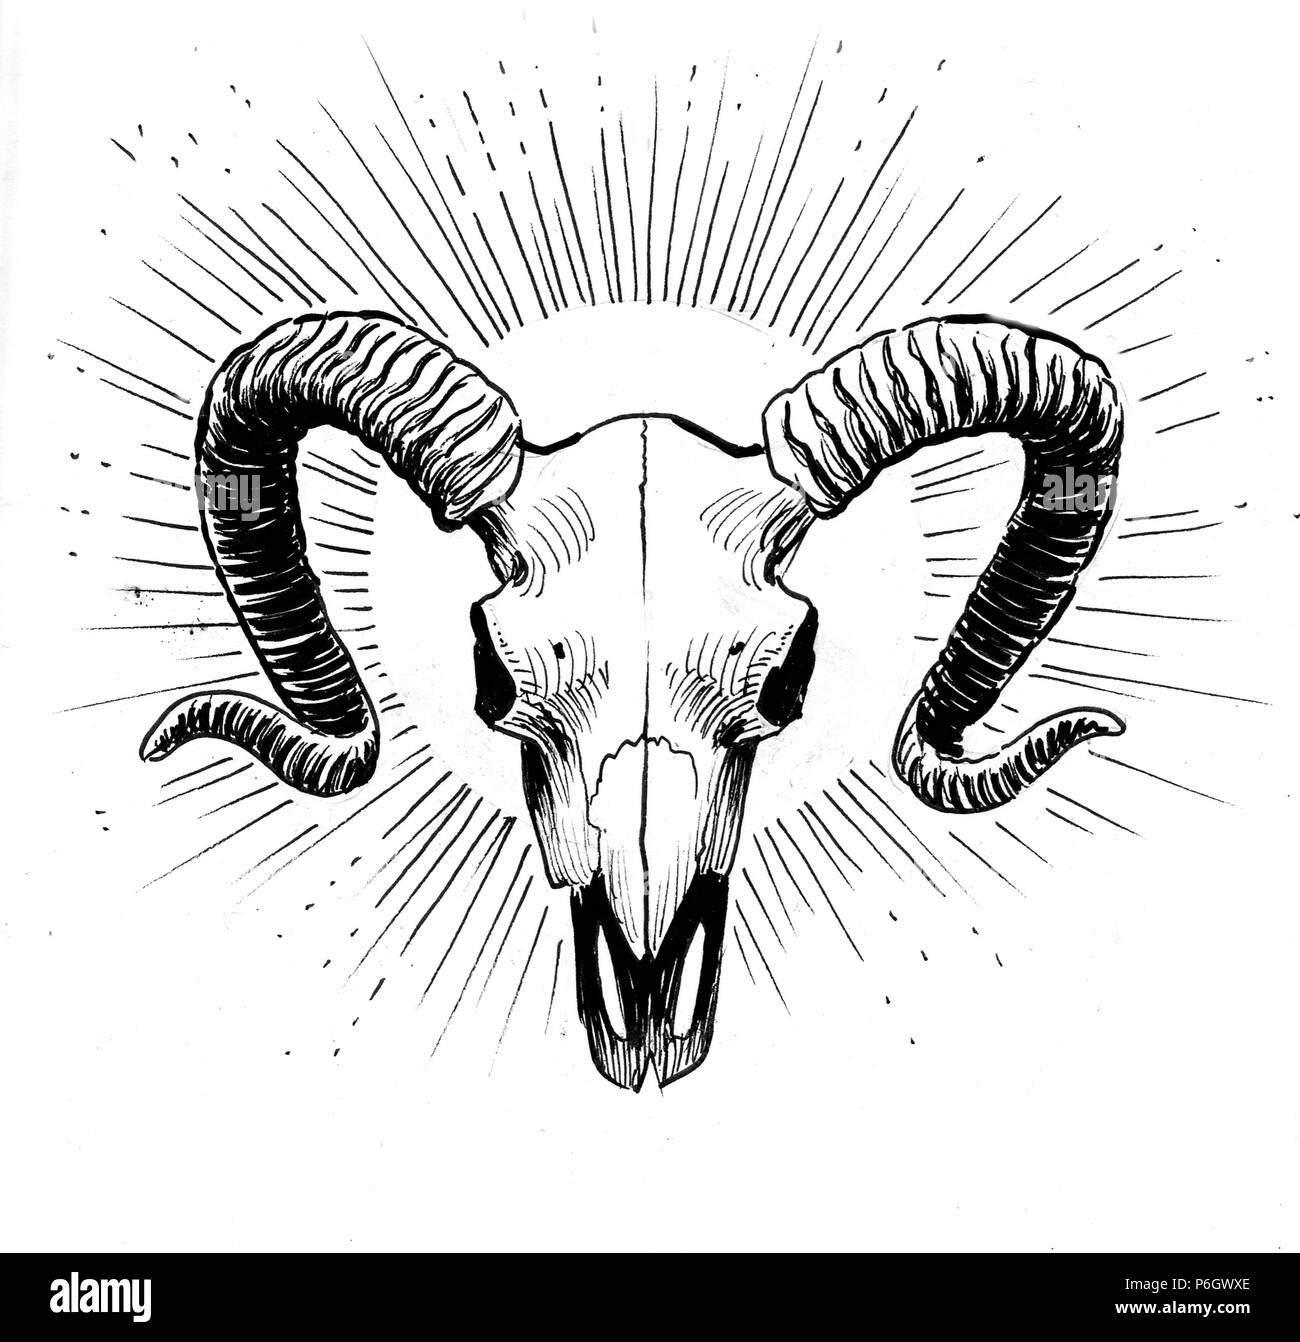 Ram skull. Ink black and white illustration Stock Photo - Alamy